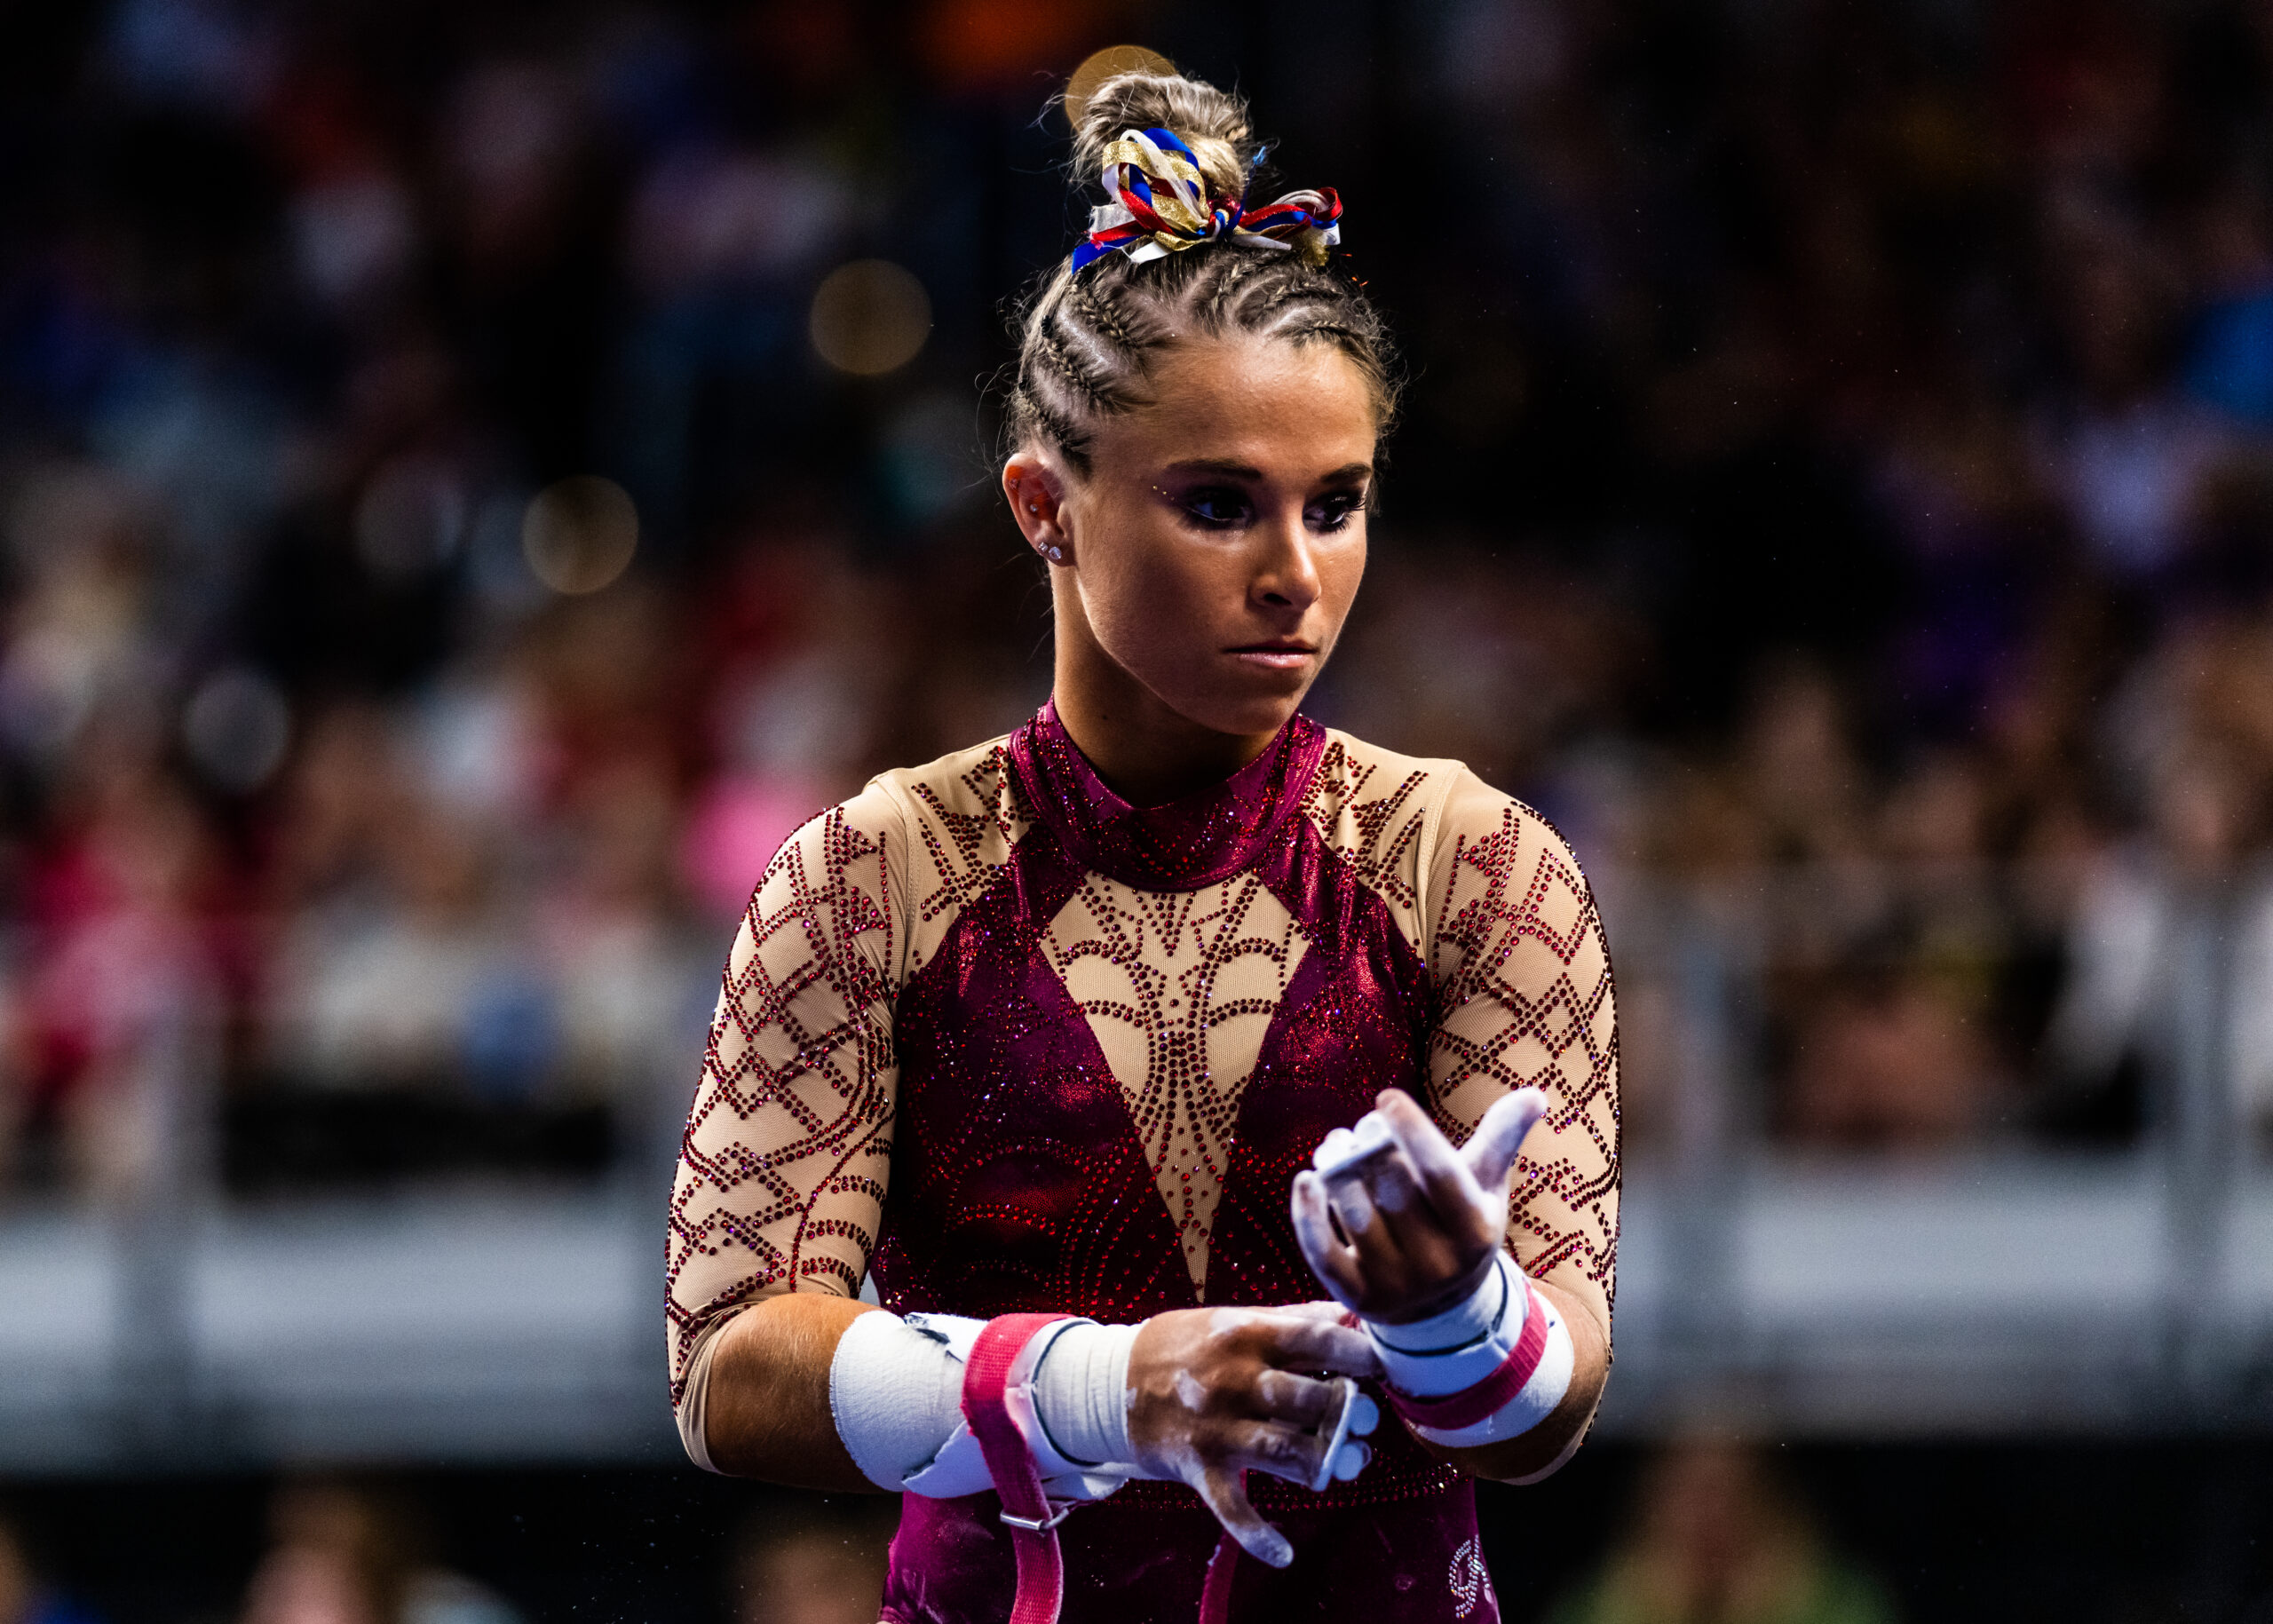 Oklahoma’s Ragan Smith at the 2023 NCAA Women’s Gymnastics Championships.